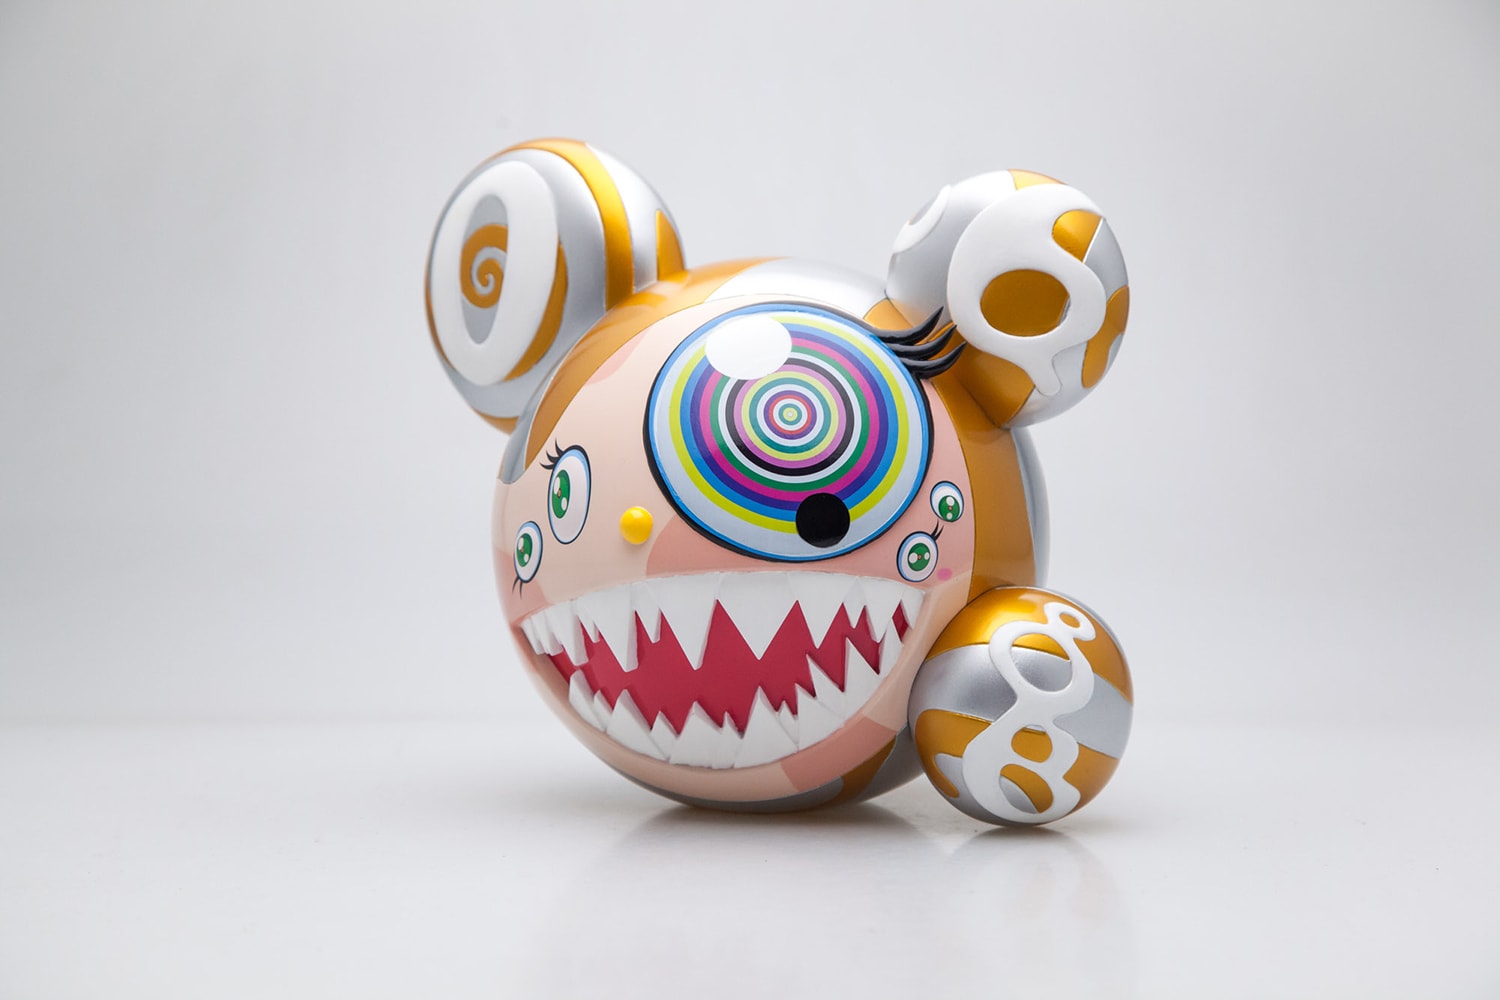 Takashi Murakami x BAIT Mr Dob figure for ComplexCon